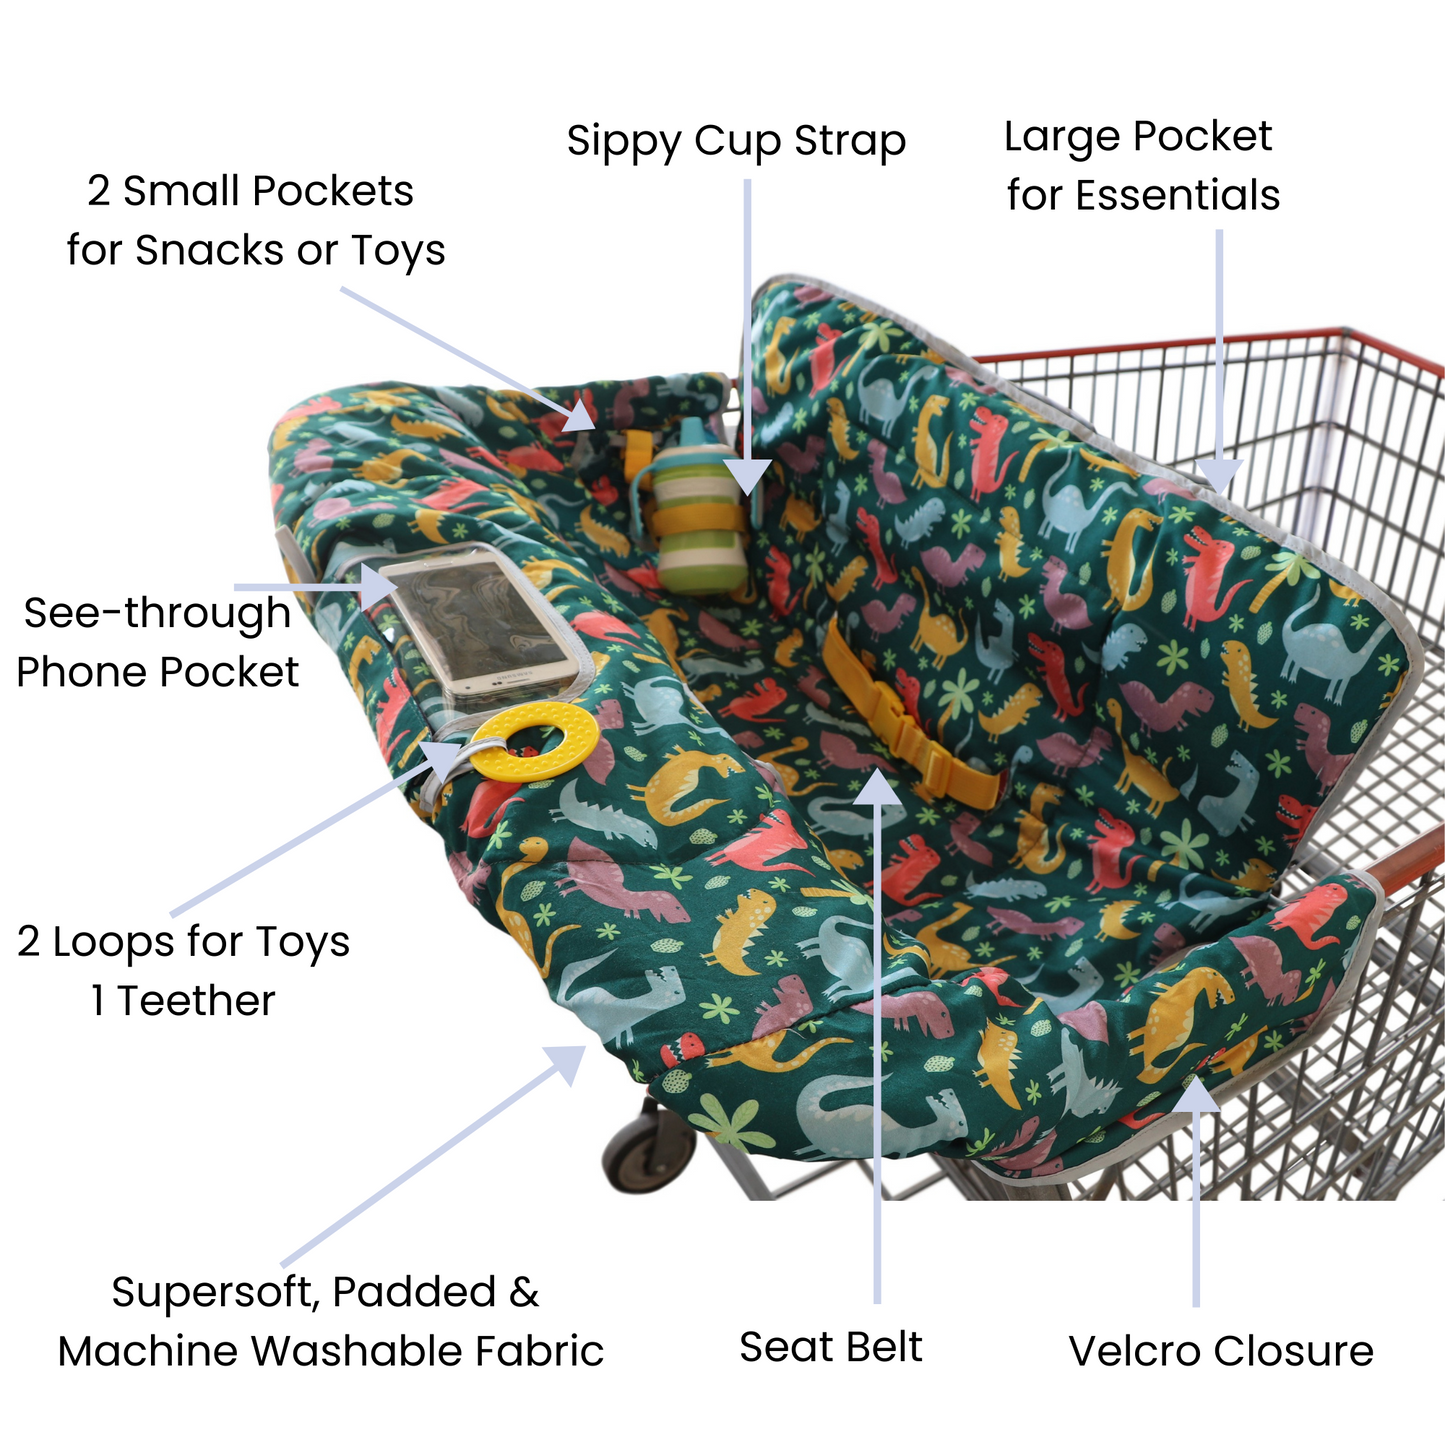 Shopping Cart & Highchair Cover - Dinosaurs